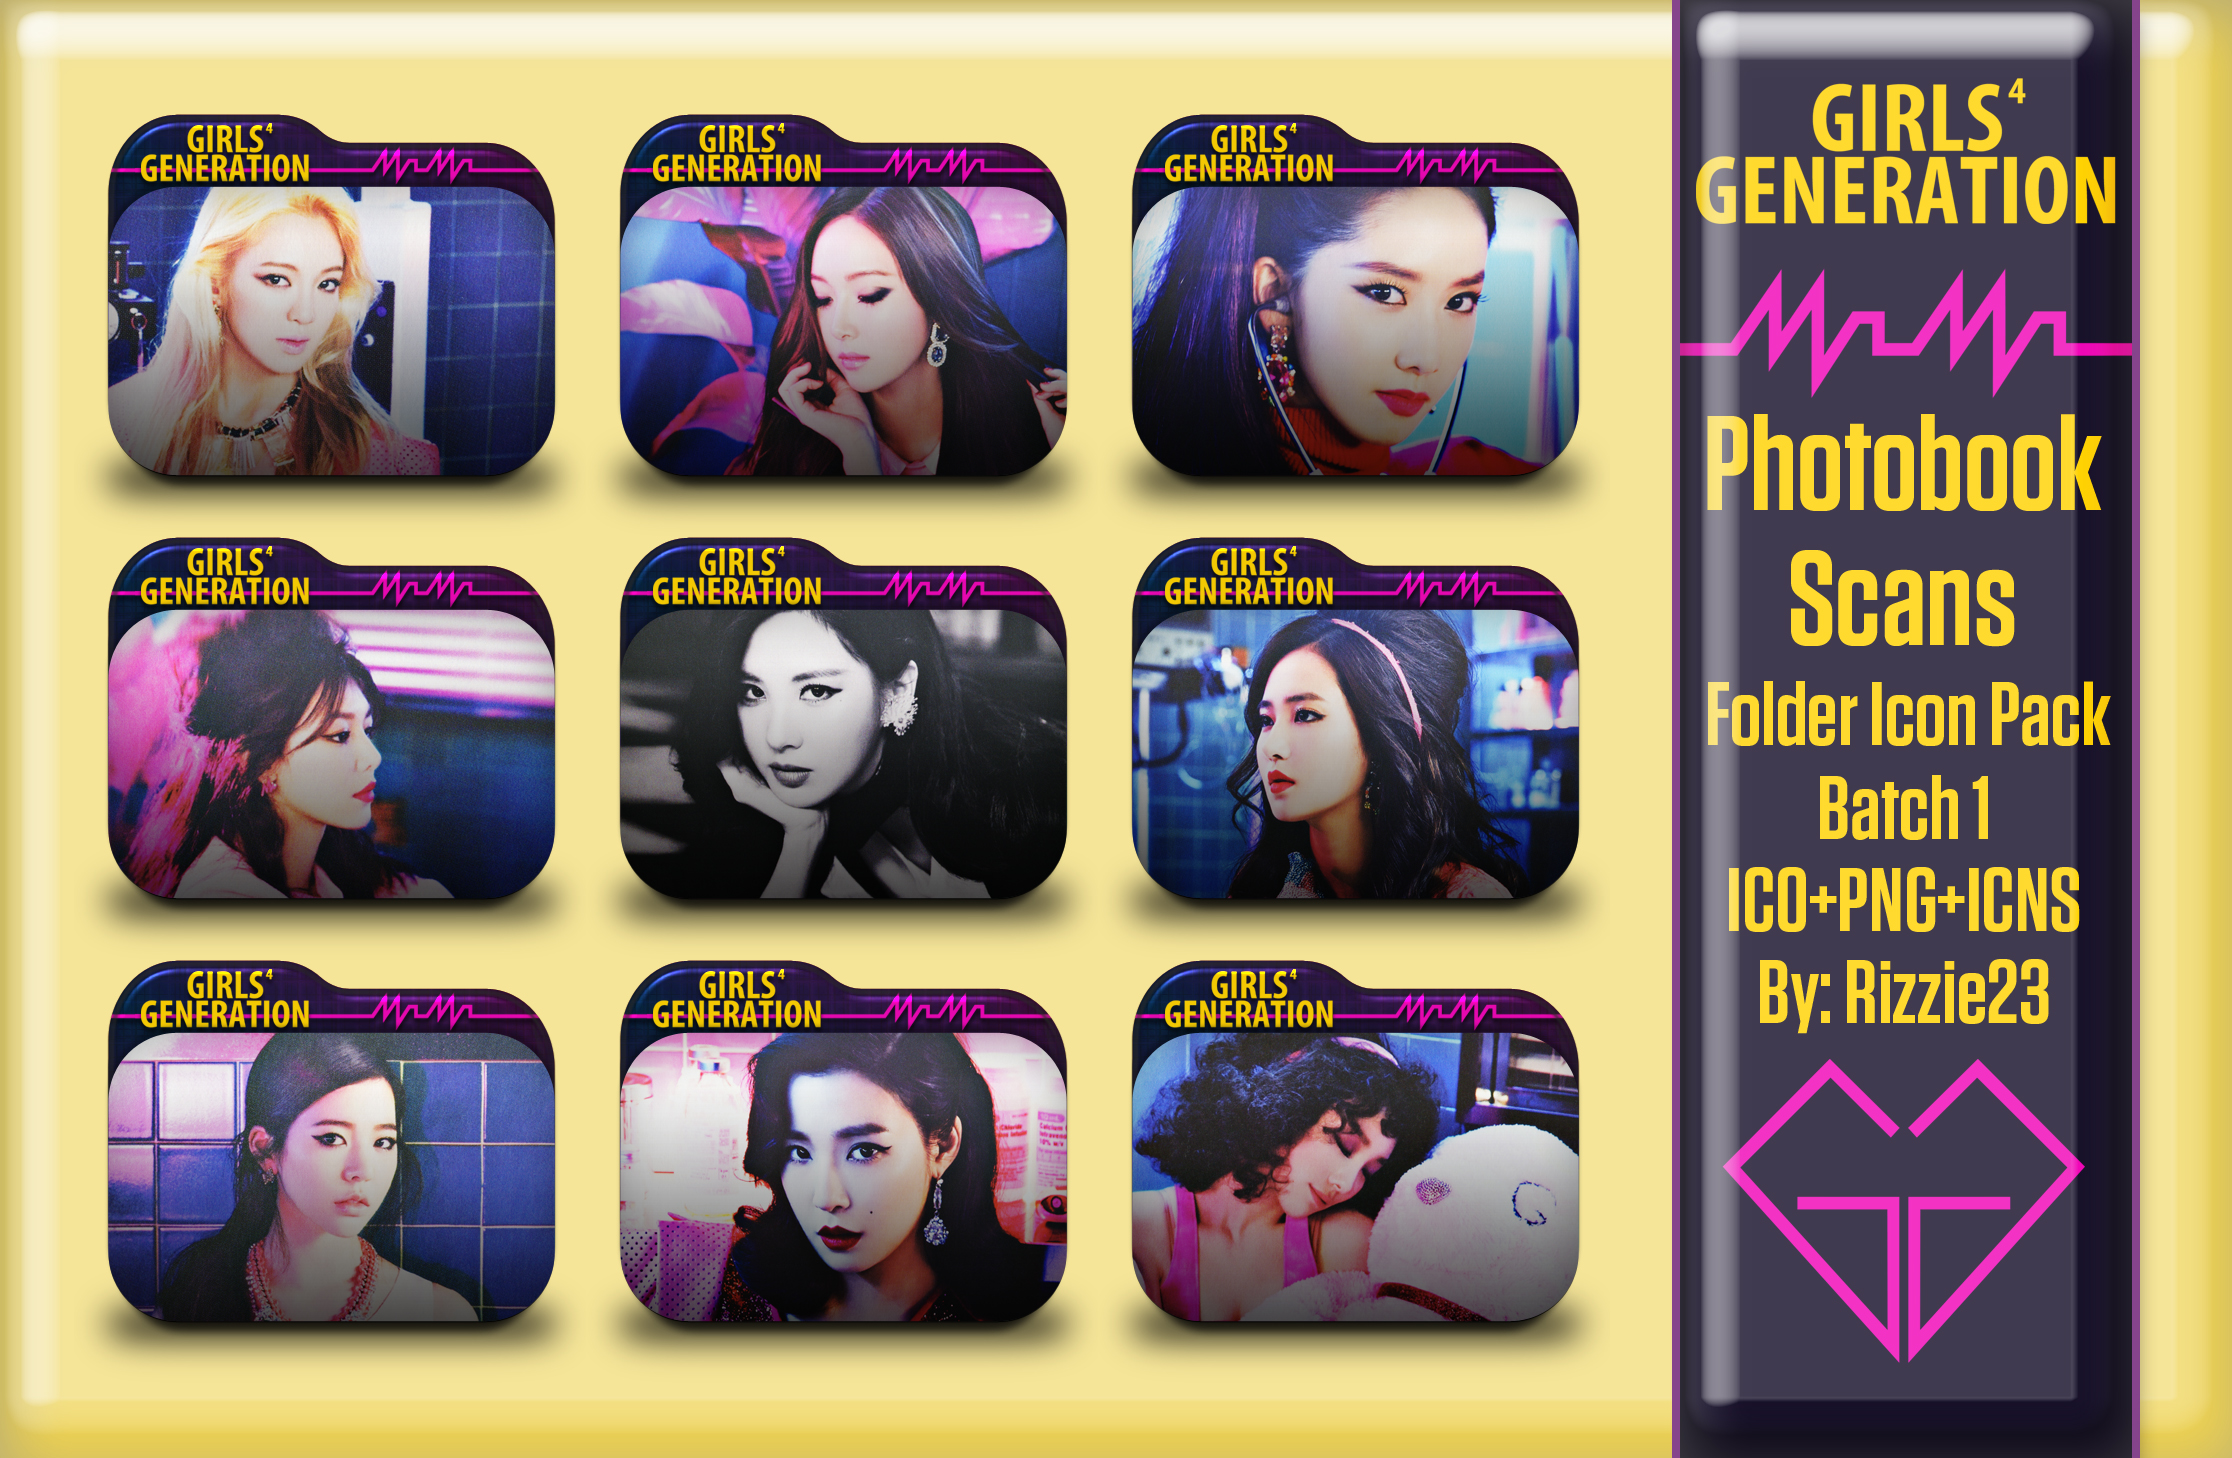 SNSD Mr. Mr. Photobook Scans Folder Icon Pack